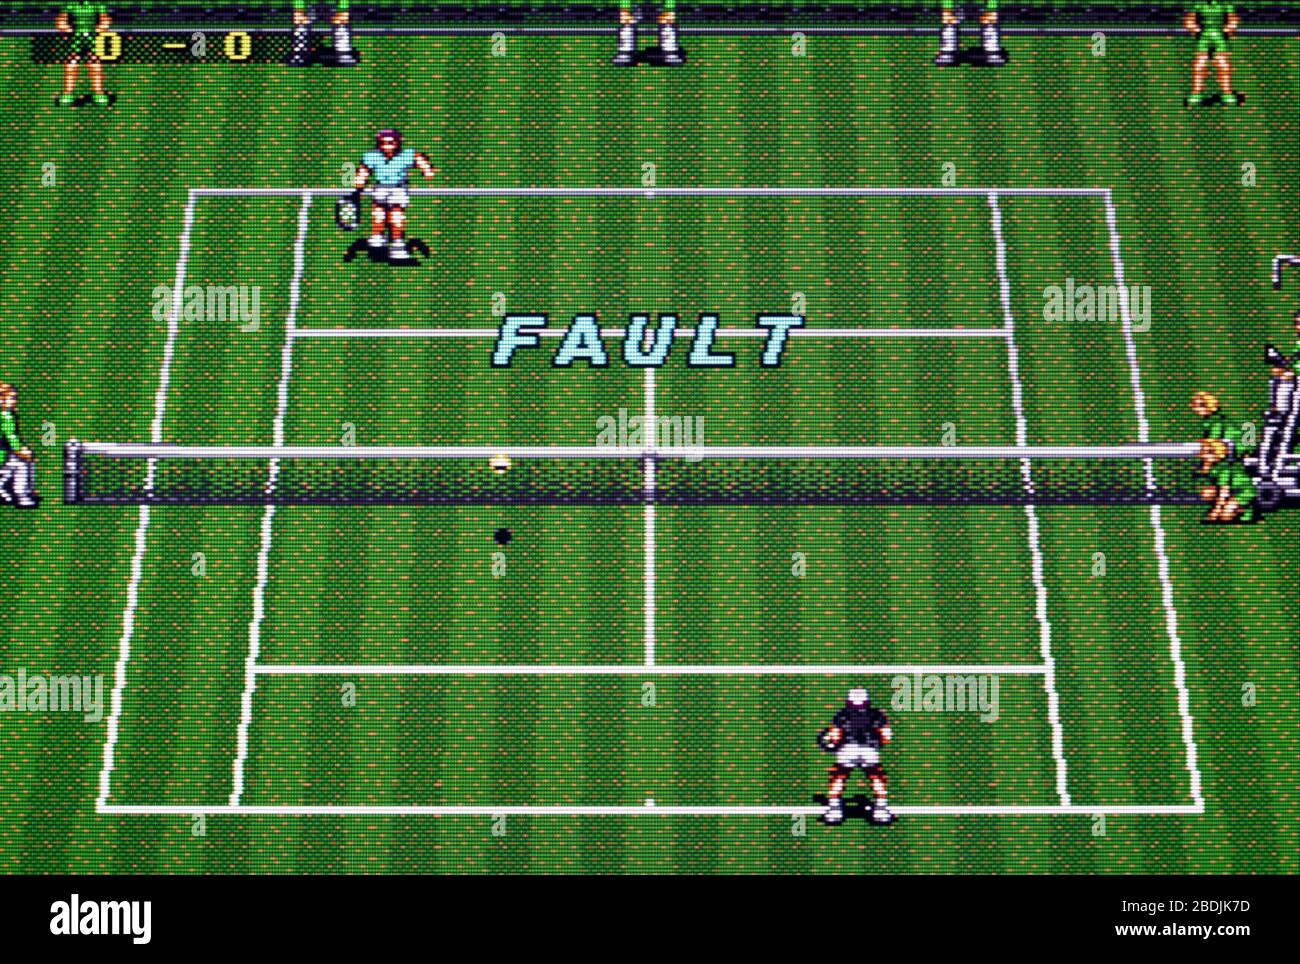 ATP Tour Campeonato de Tenis - Sega Genesis Mega Drive - sólo para uso editorial Foto de stock